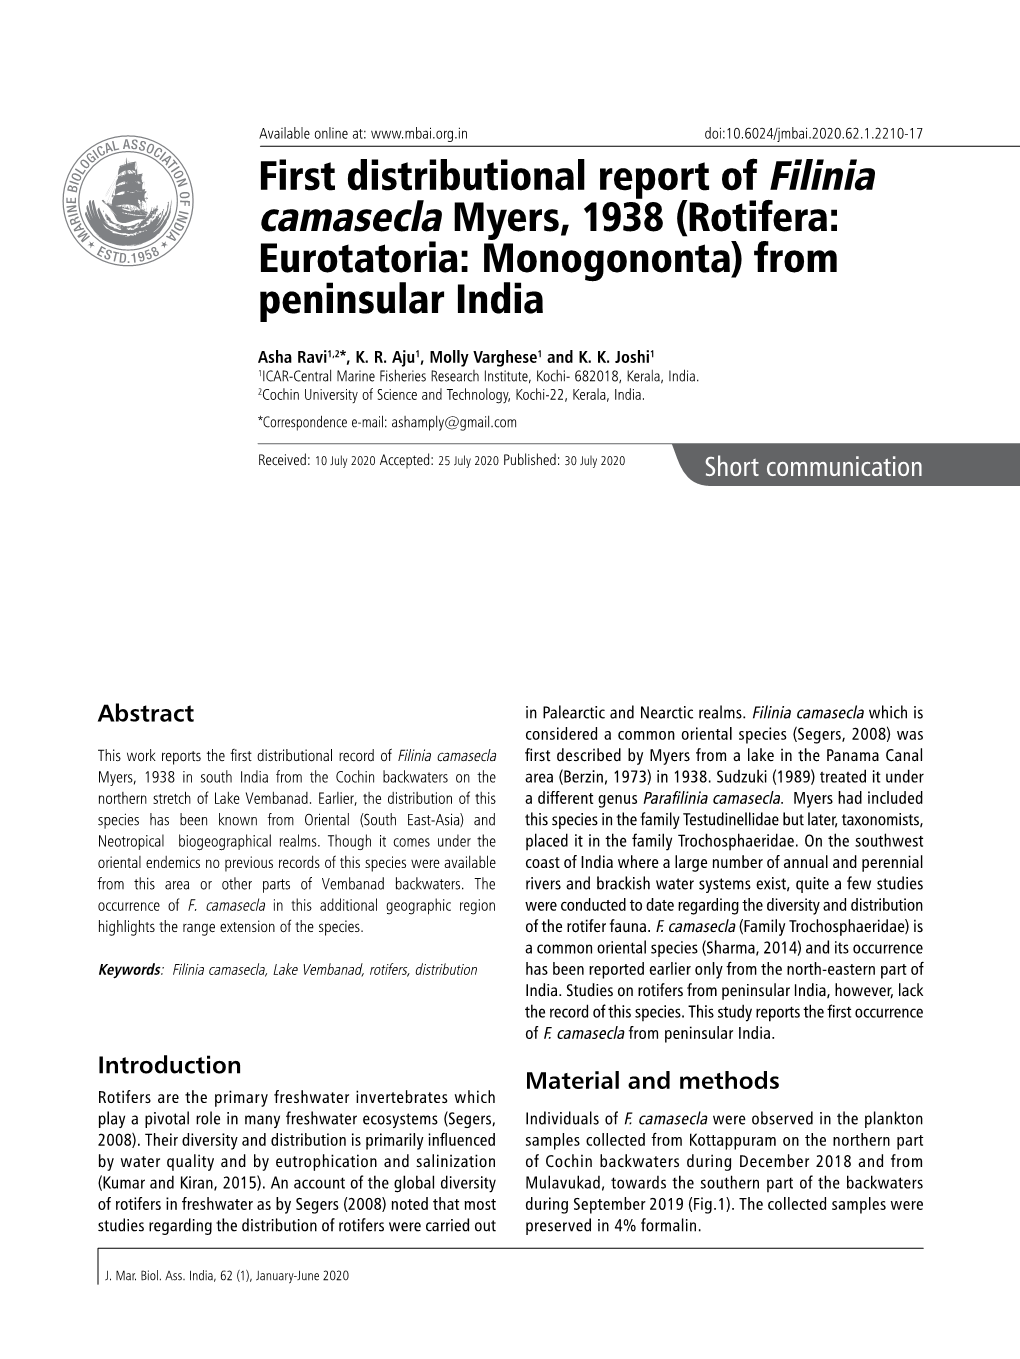 First Distributional Report of Filinia Camasecla Myers, 1938 (Rotifera: Eurotatoria: Monogononta) from Peninsular India